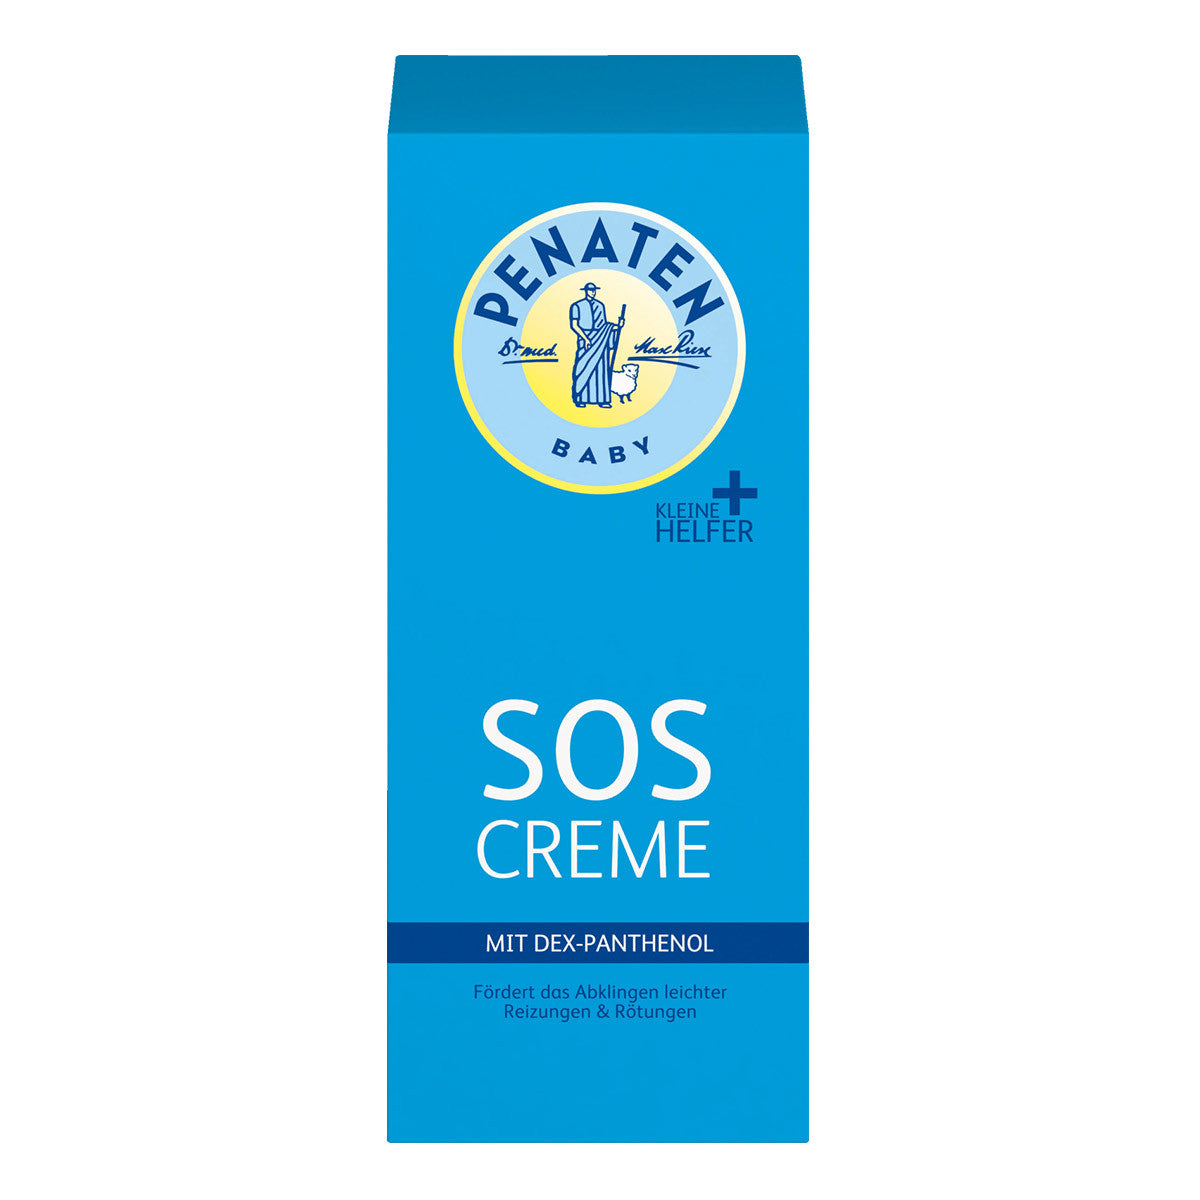 Primary image of SOS Creme with Panthenol